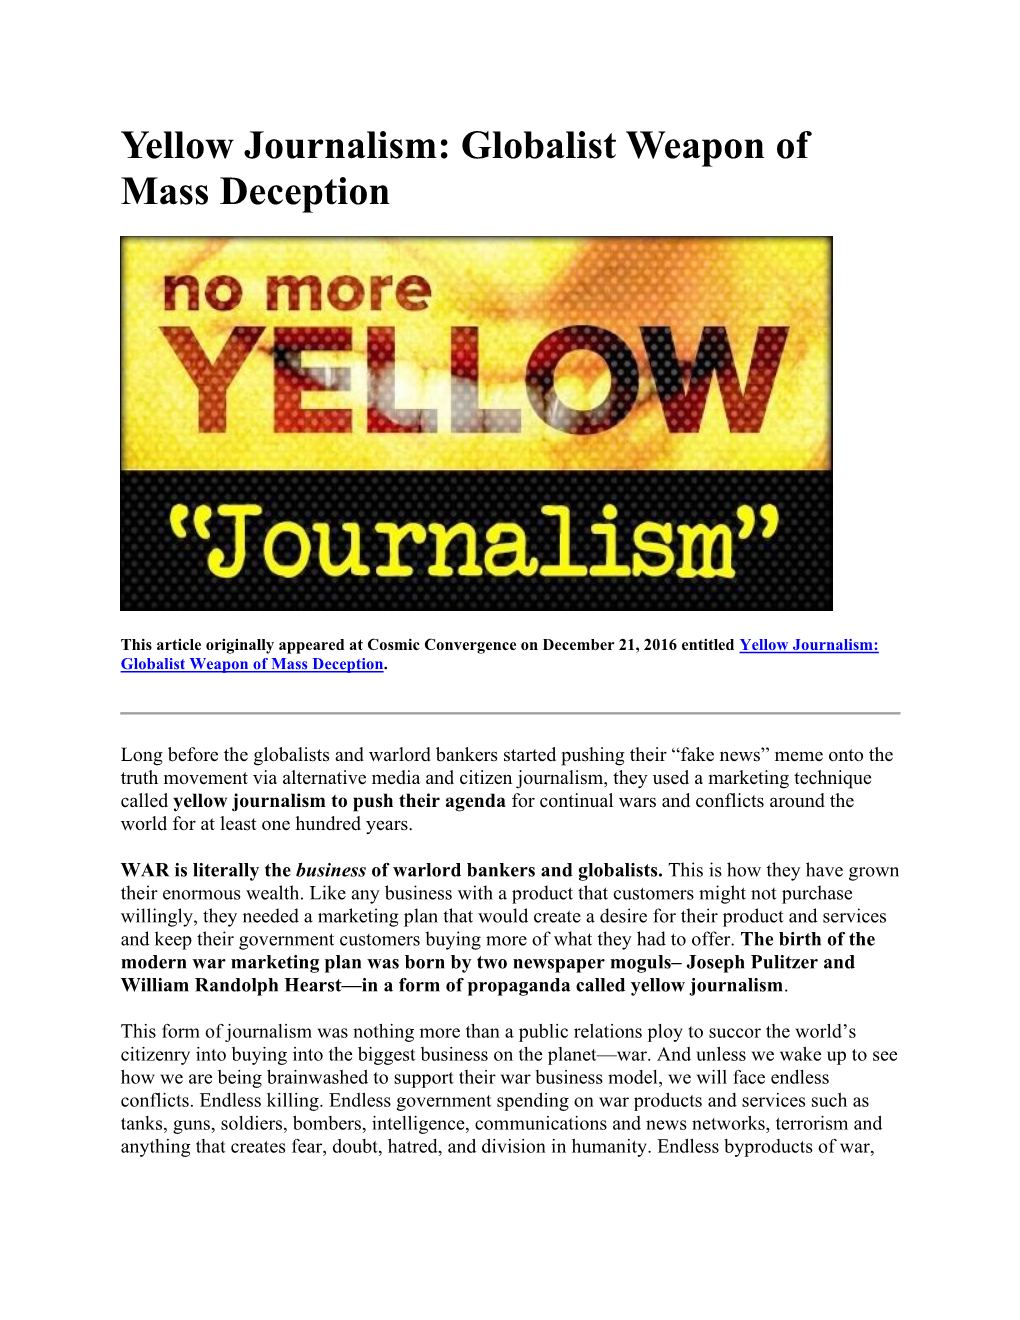 Yellow Journalism: Globalist Weapon of Mass Deception